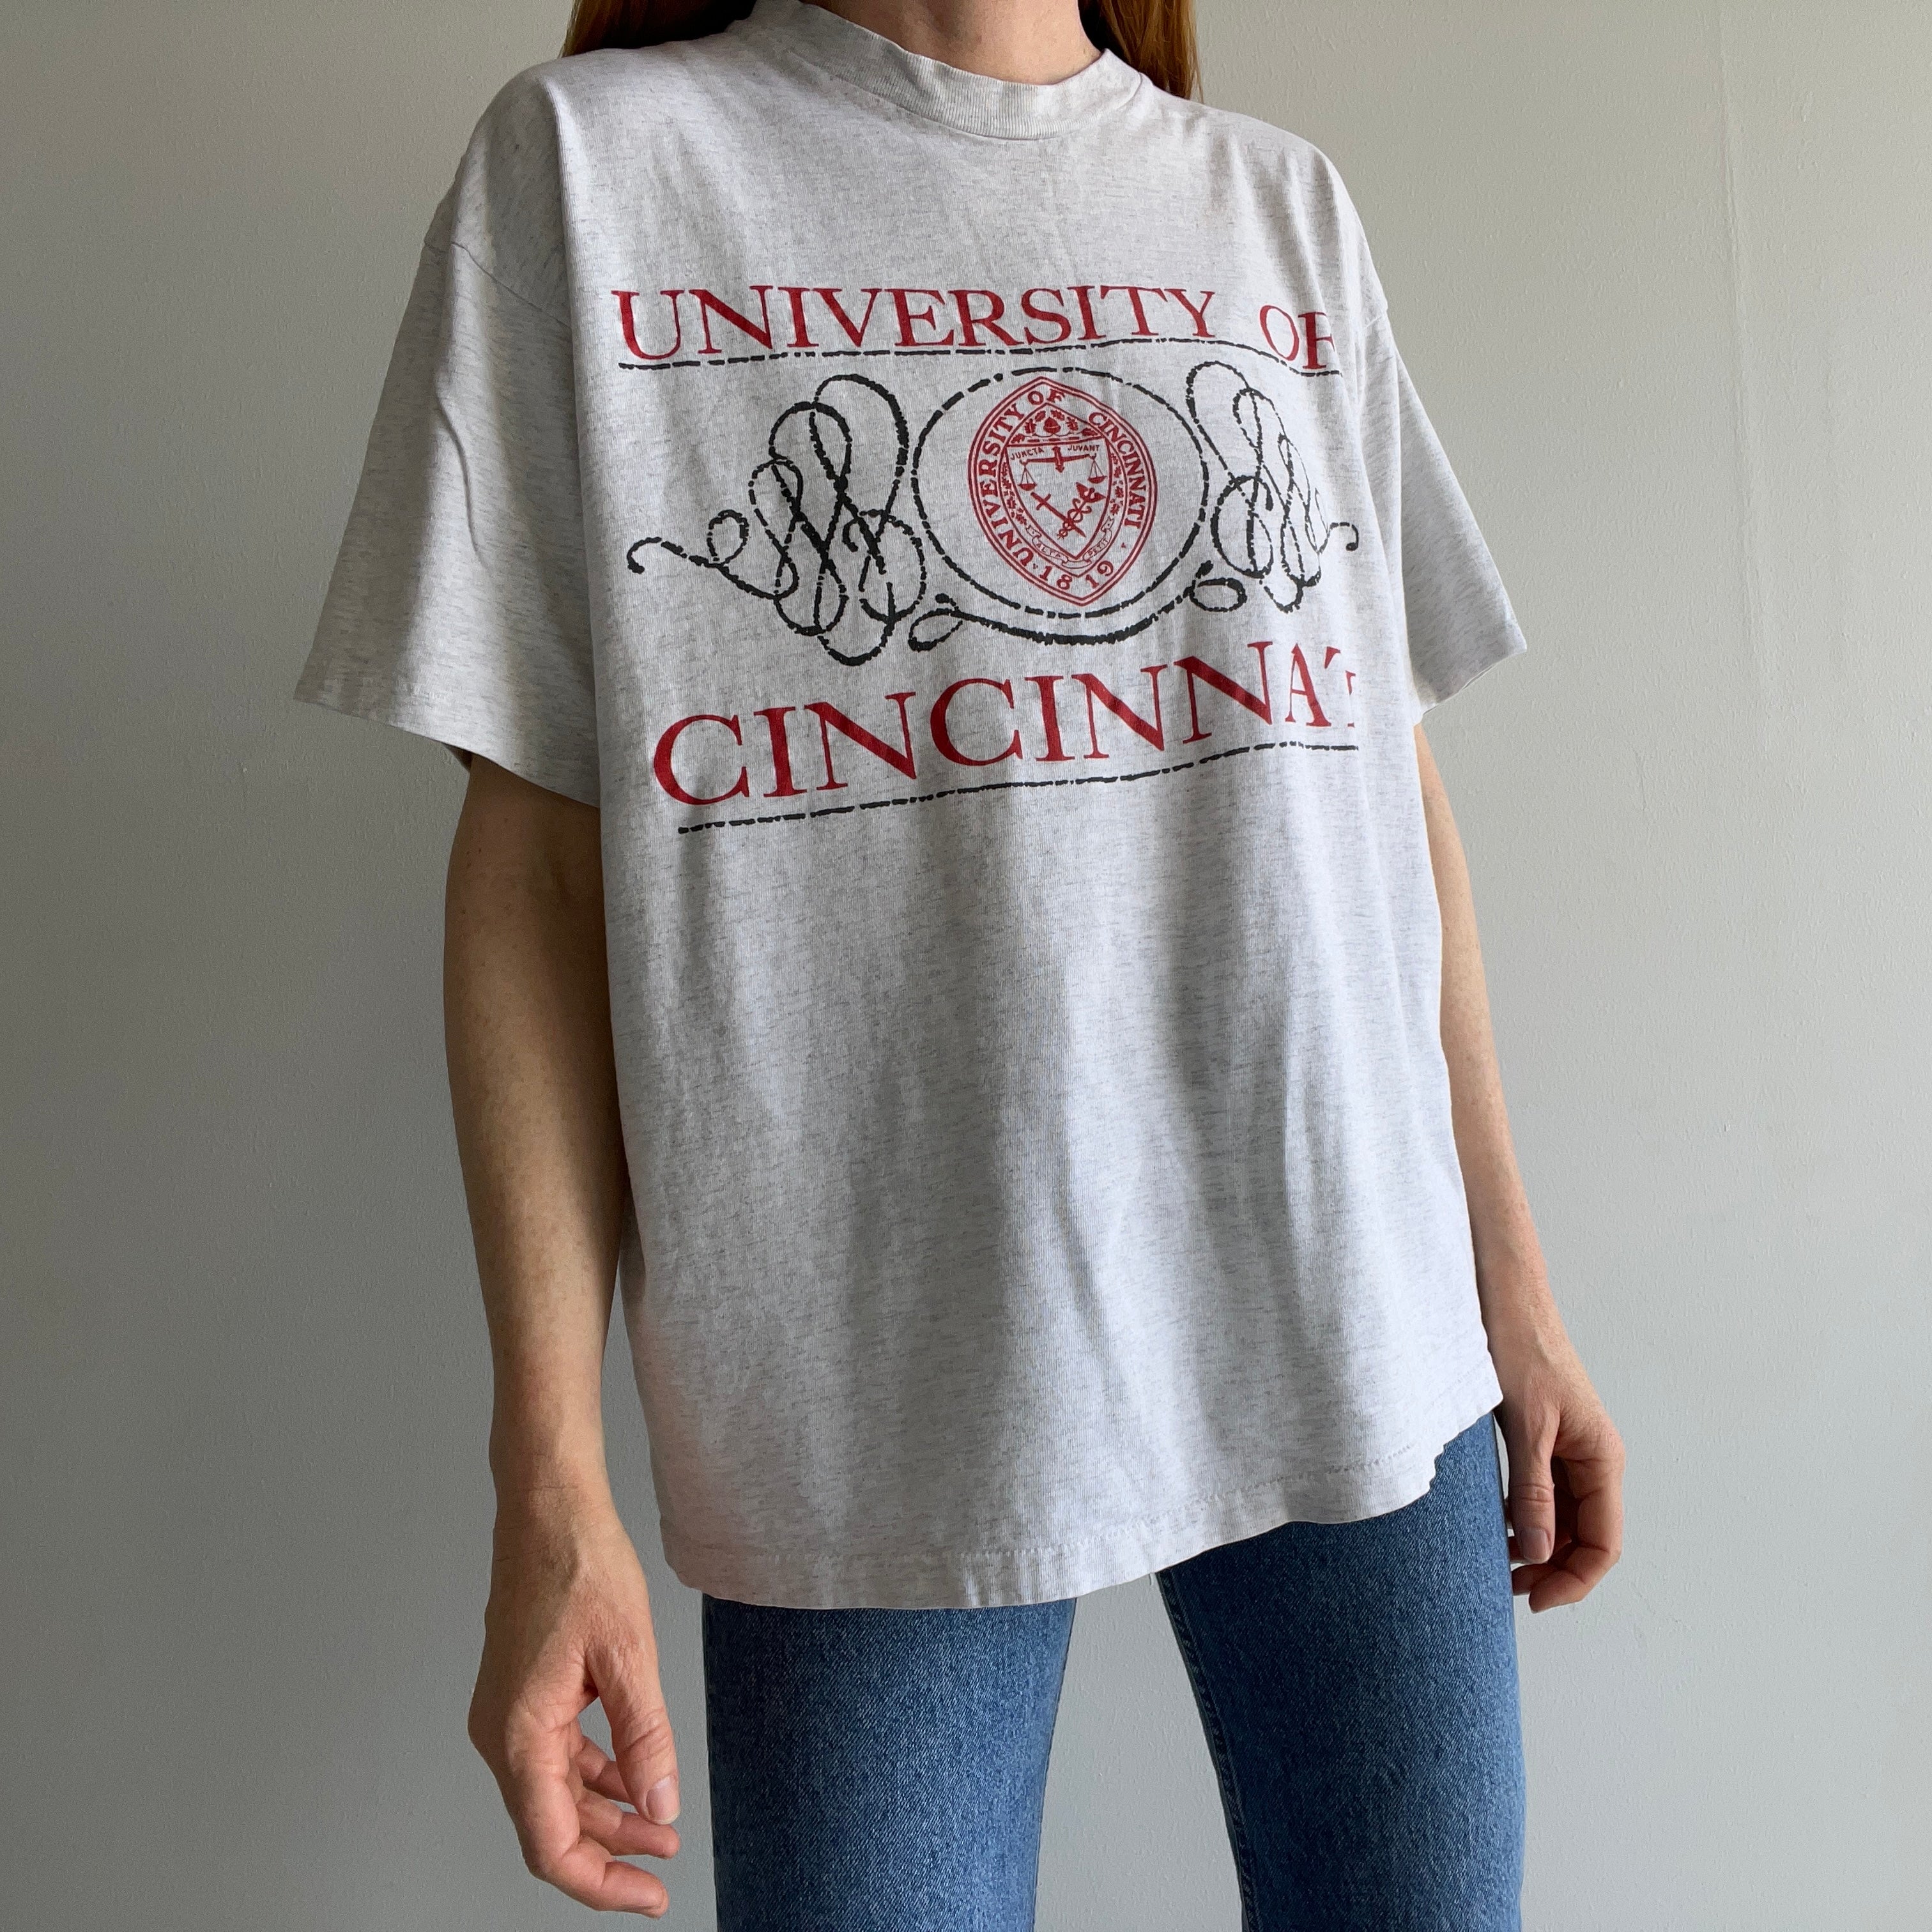 1980/90s University of Cincinnati T-Shirt